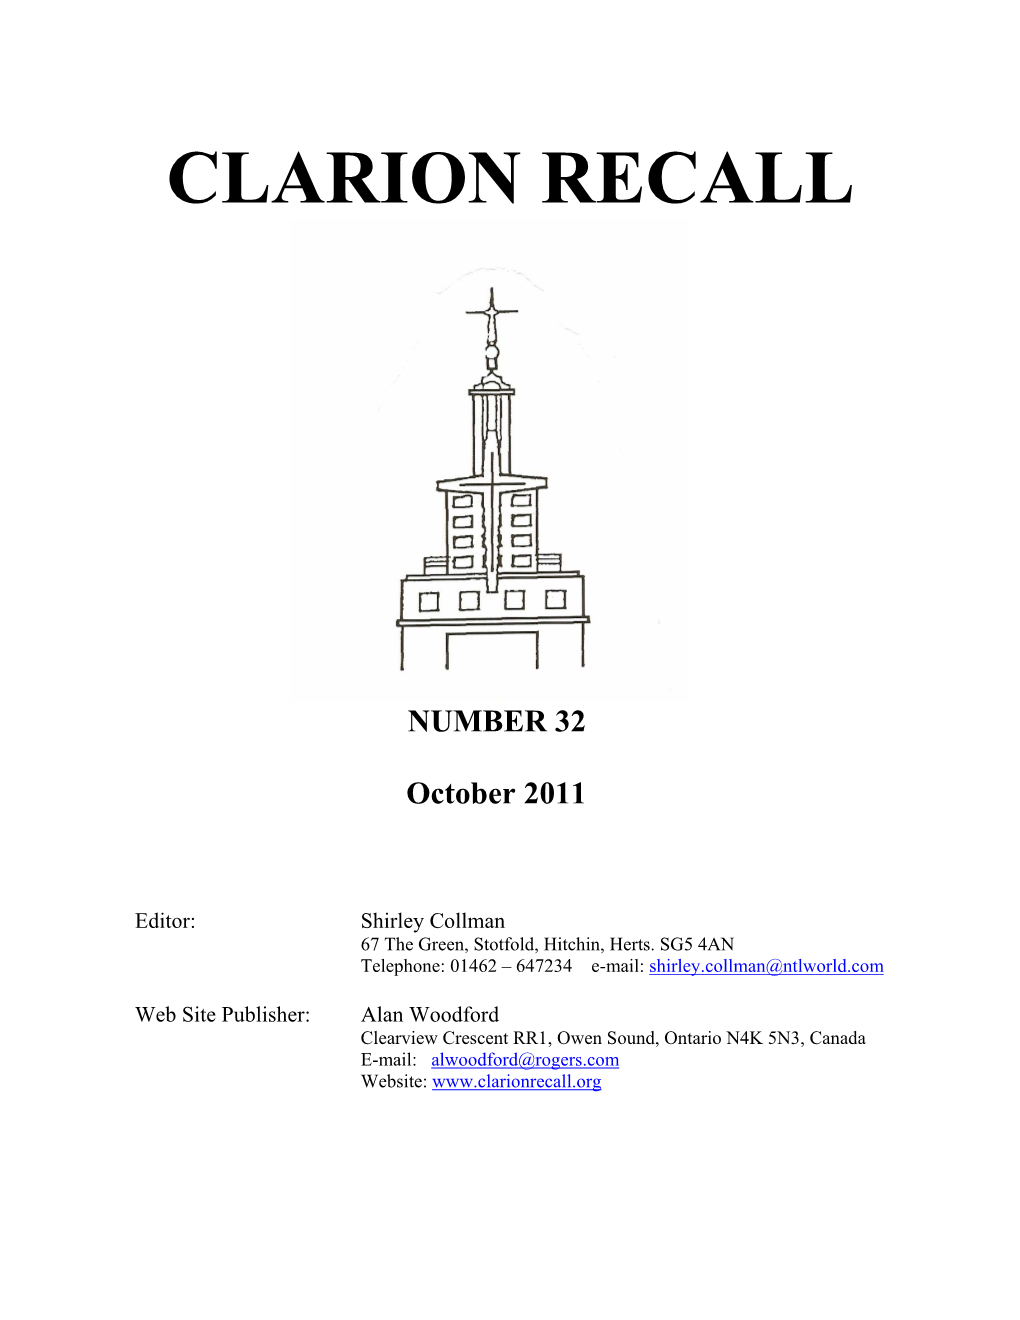 Clarion Recall